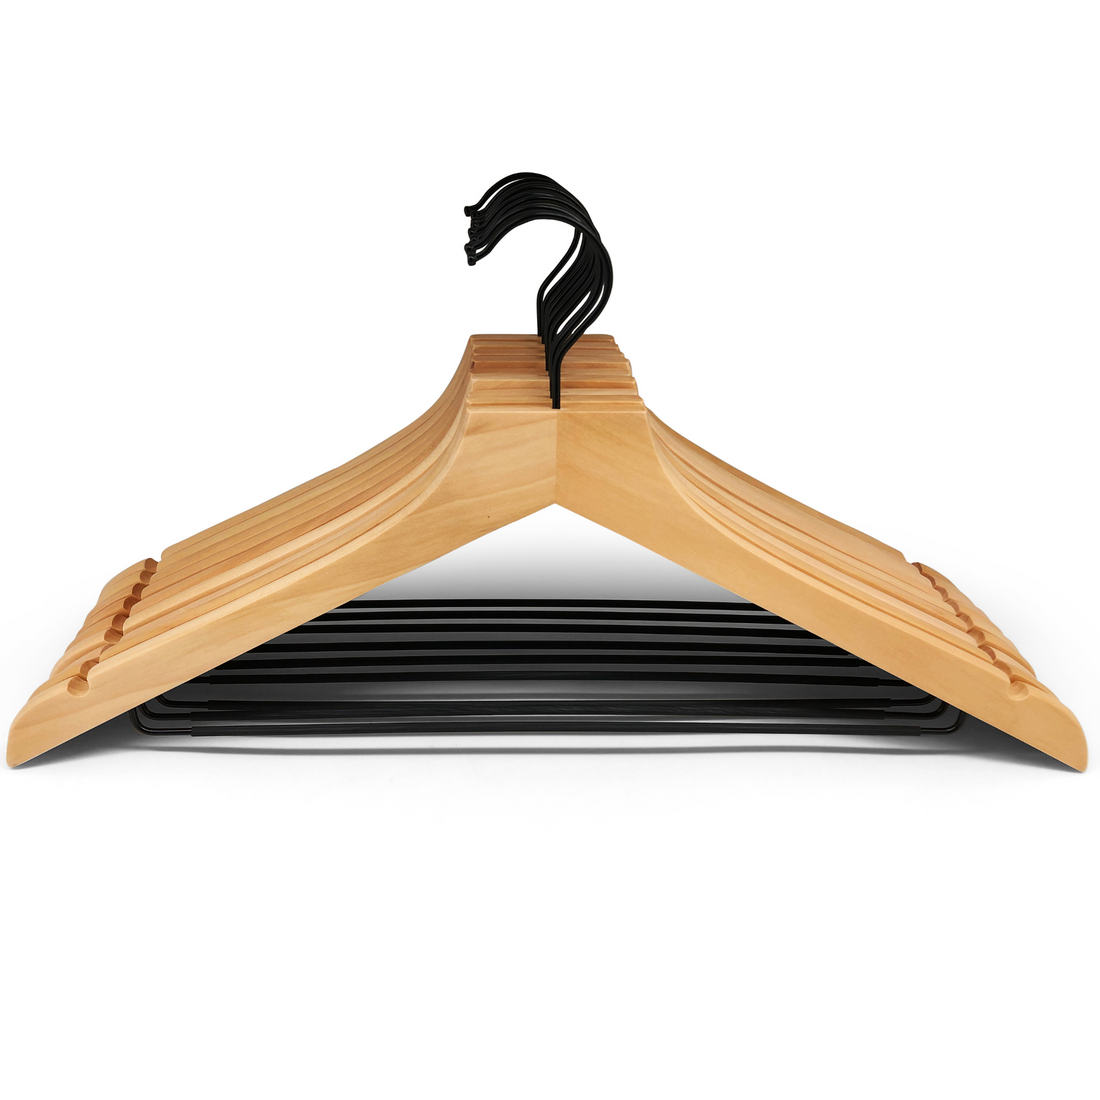 Economy Wood Clothes Hanger Kit - Black w/Chrome Hardware